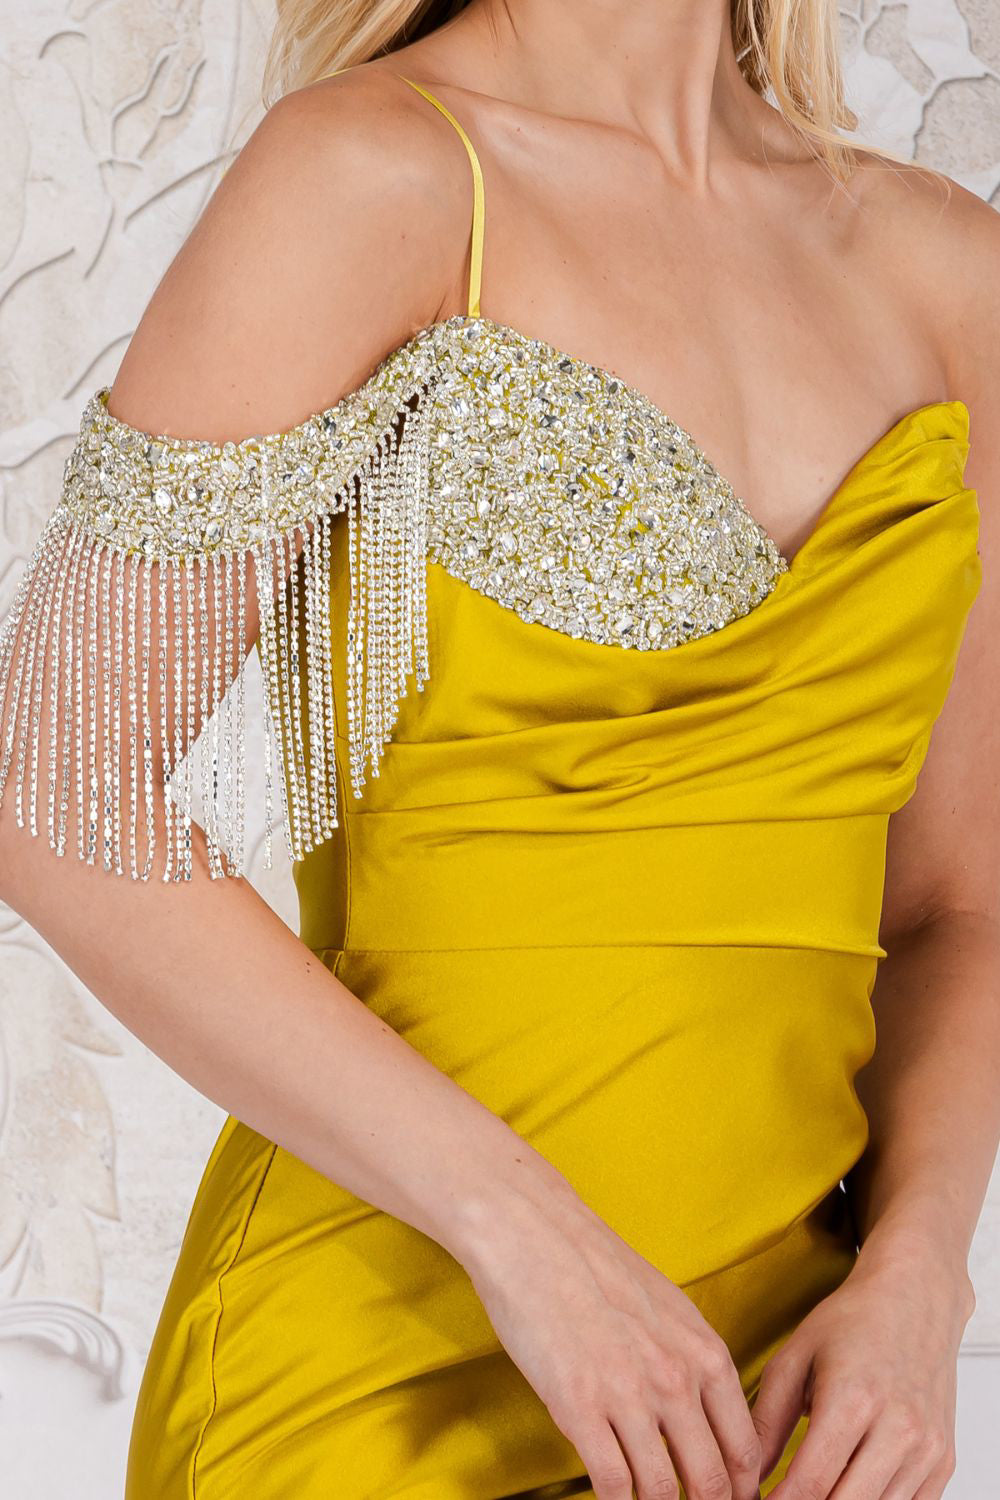 Spaghetti Straps High Side Slit Embellished Jewel Long Prom Dress AC3017-Evening Dress-smcfashion.com